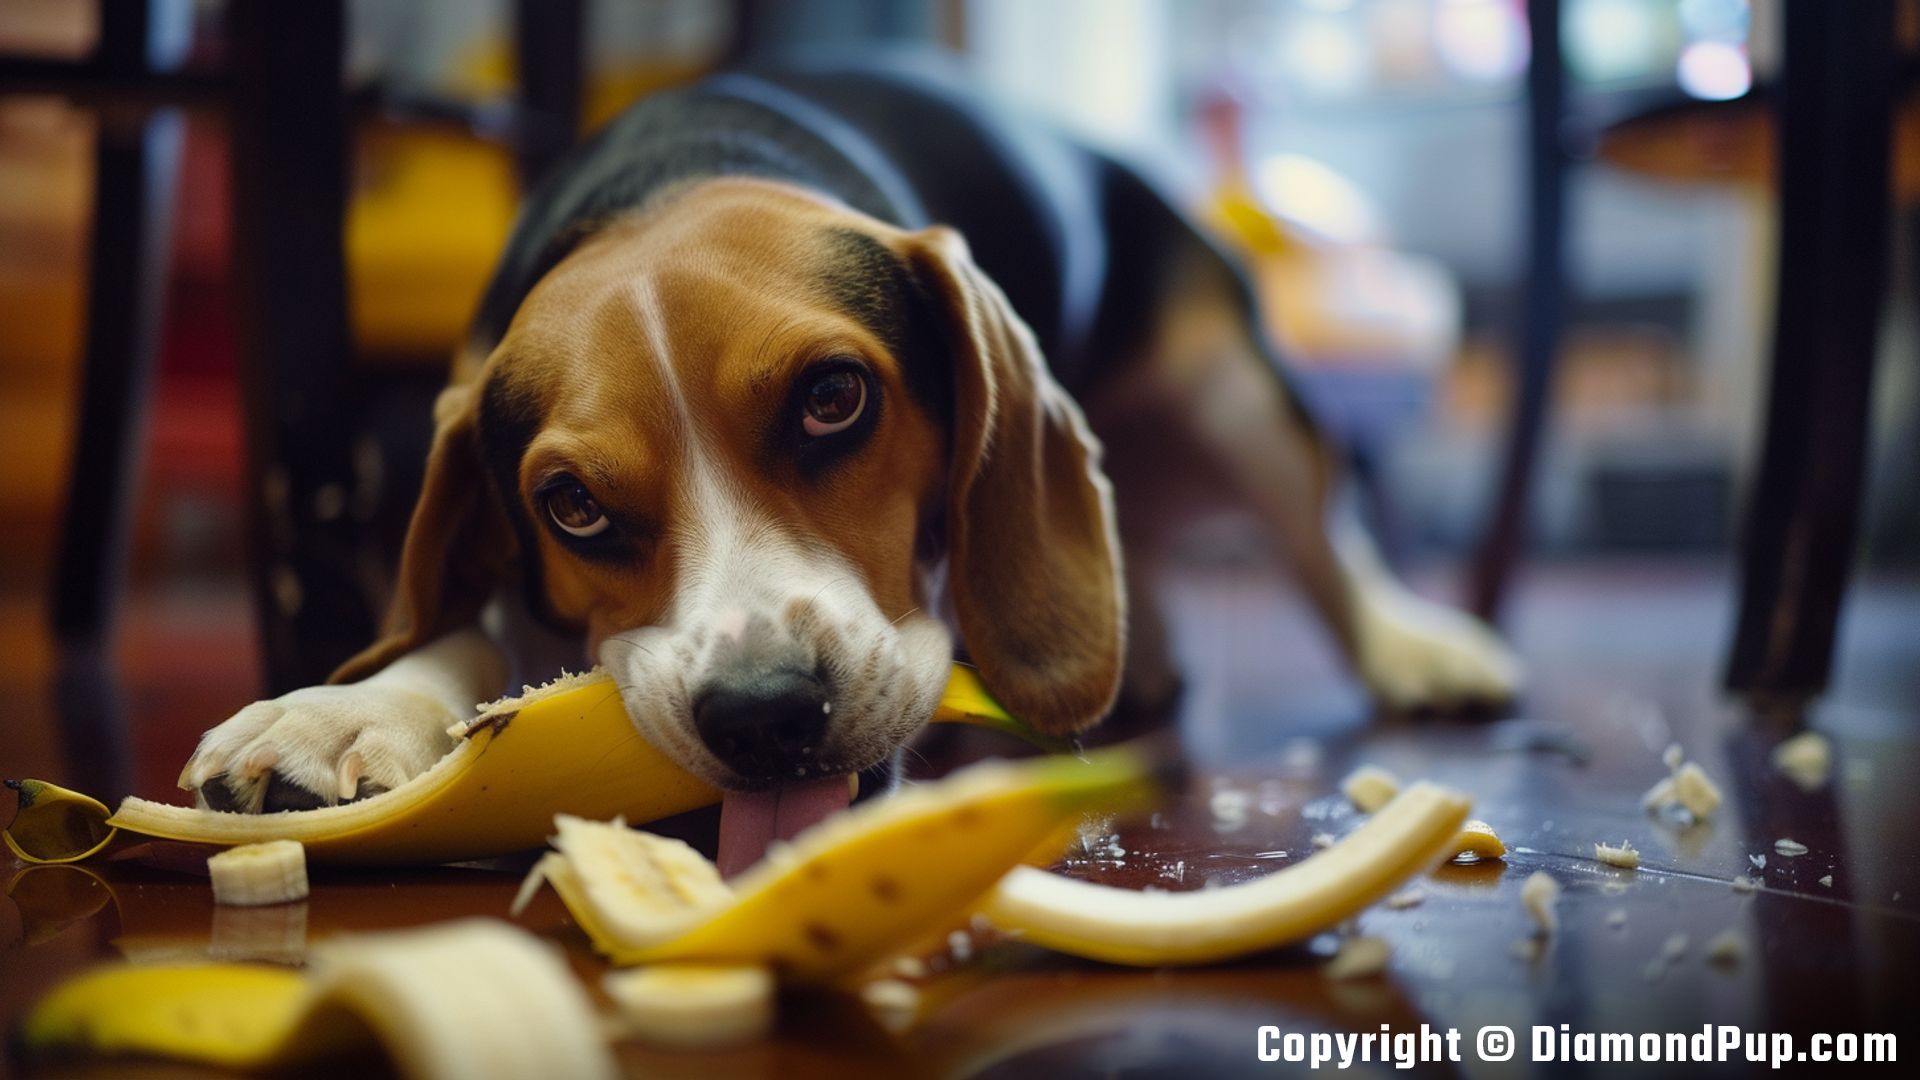 Photograph of an Adorable Beagle Snacking on Banana